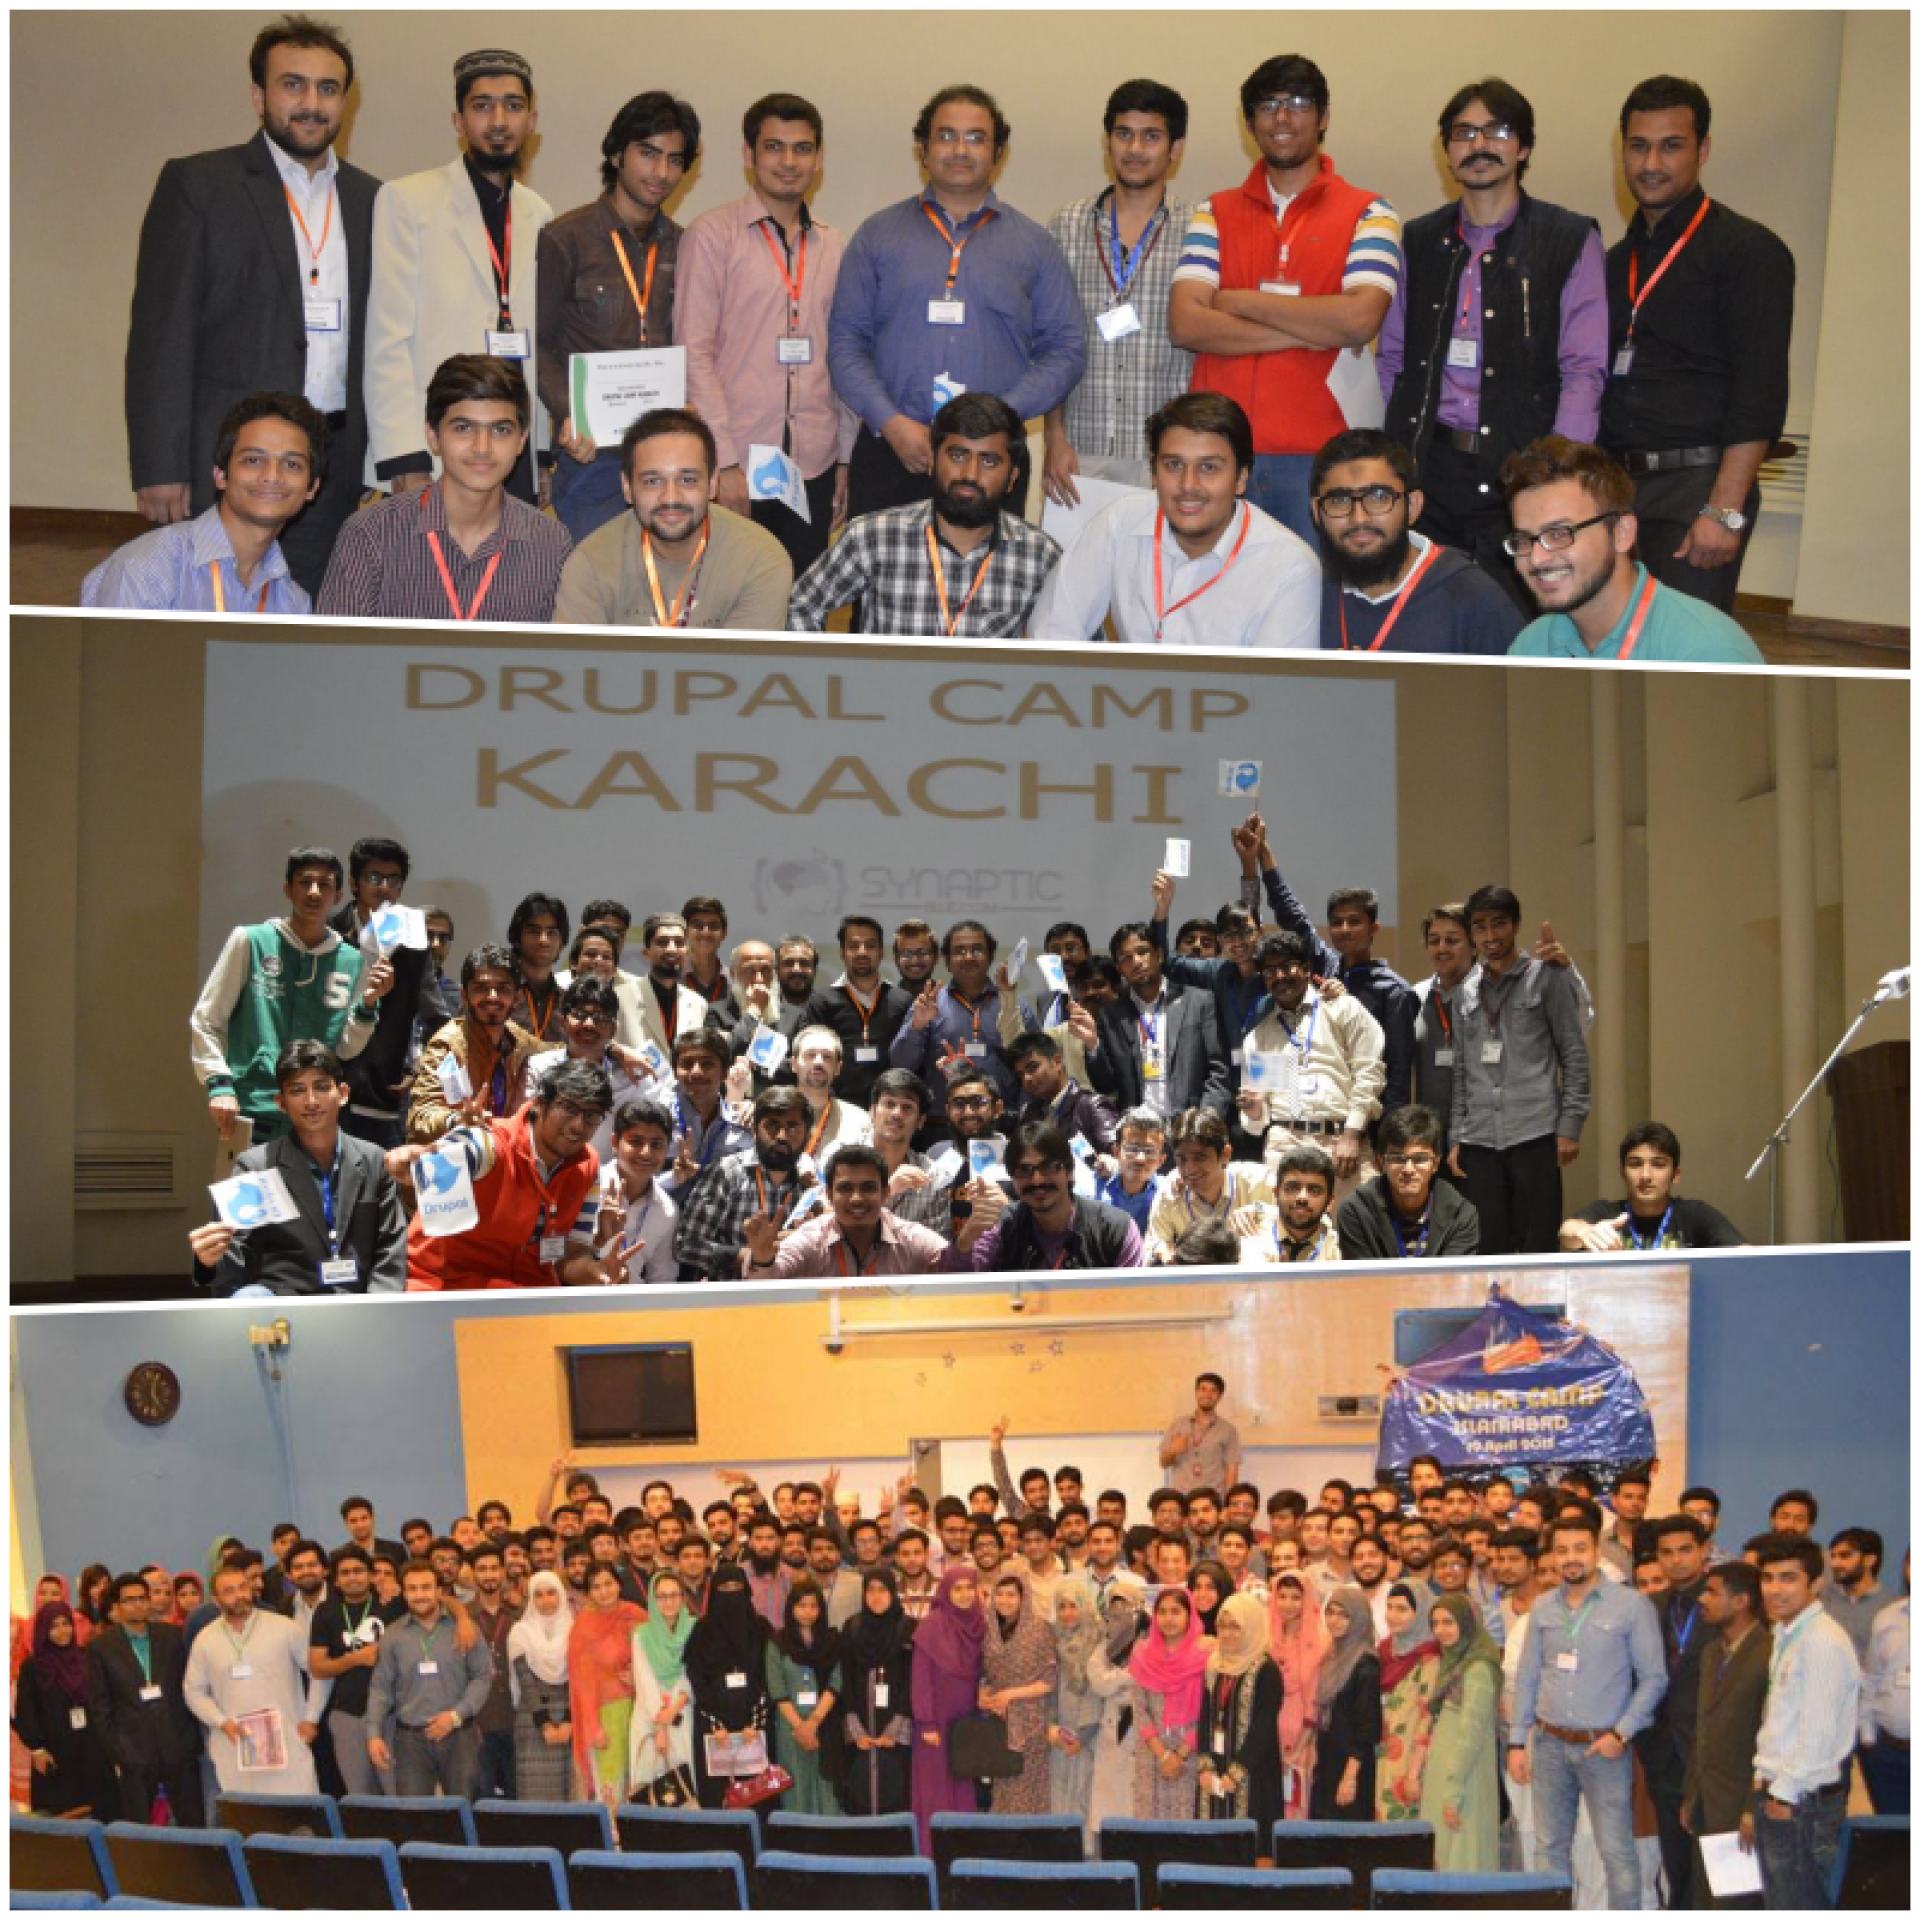 Group photo from DrupalCamp Karachi